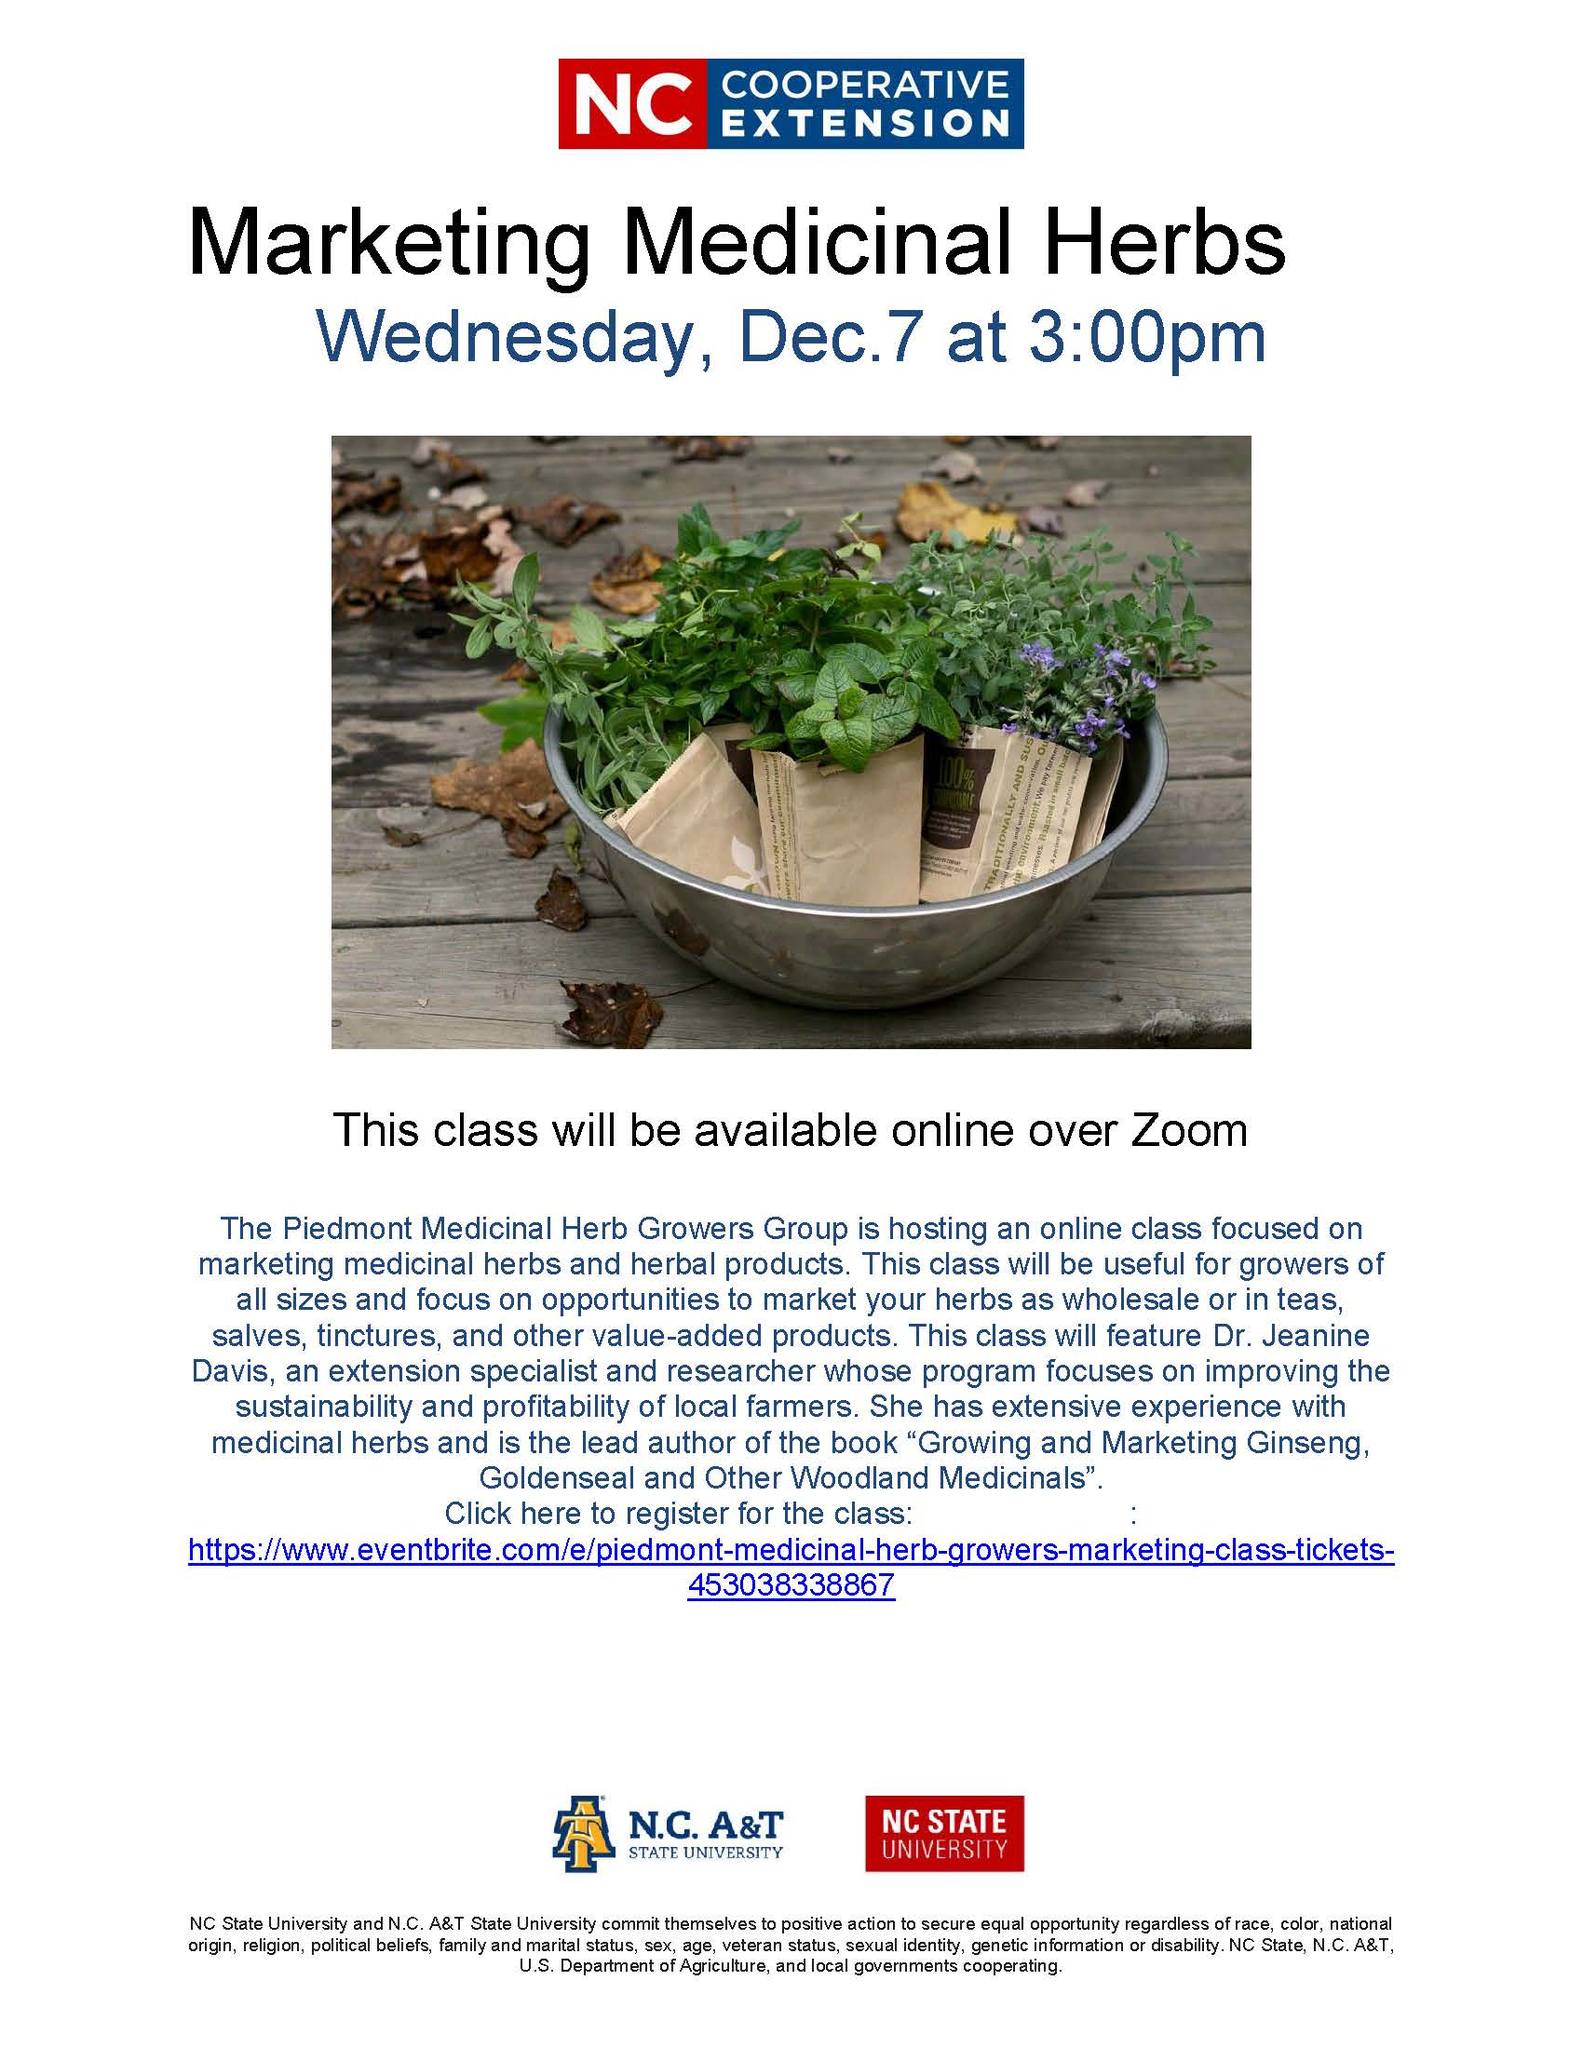 Marketing Medicinal Herbs. Wednesday, December 7 at 3:00 p.m.